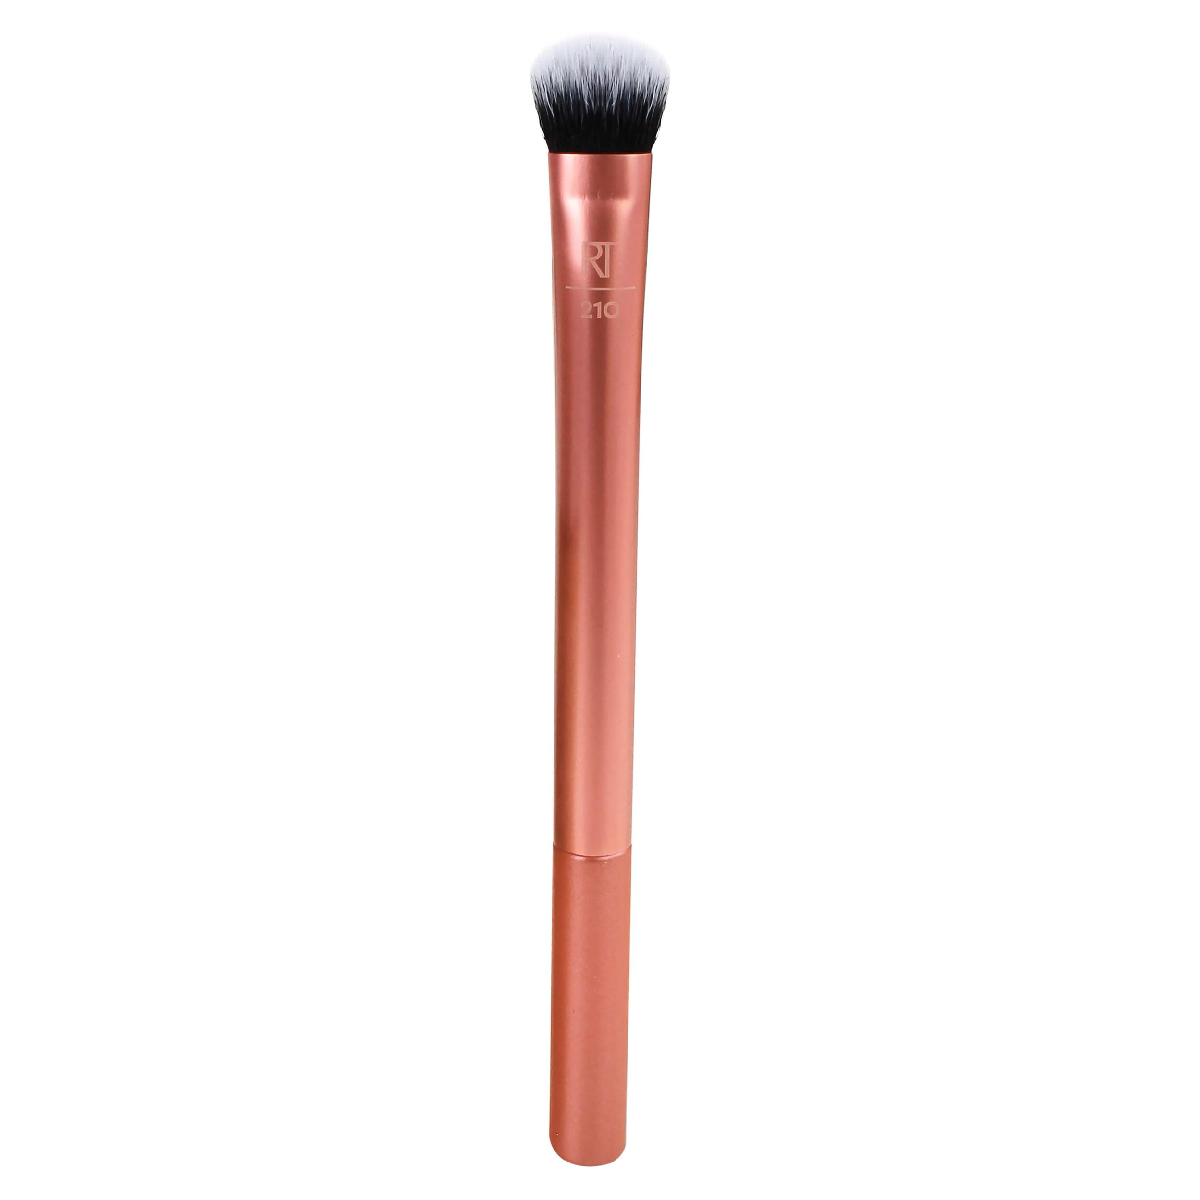 Sigma Concealer Brush - a makeup brush designed for precise concealer application on a white background.